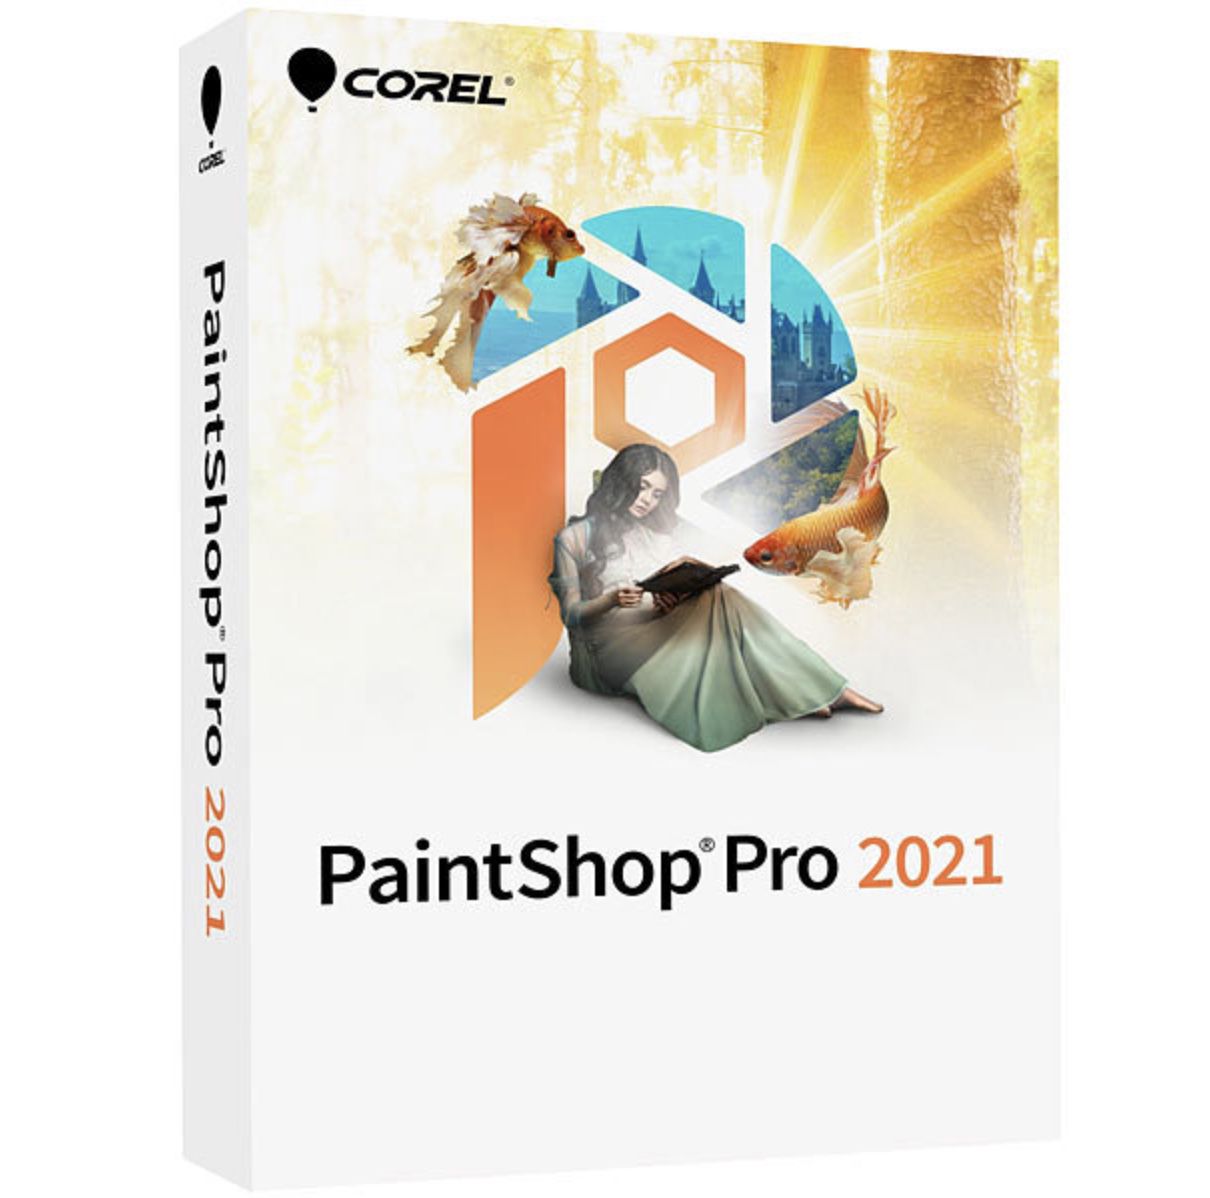 Pearl: Corel PaintShop Pro 2021 gratis (statt ca. ab 55€) + 5,95€ VSK